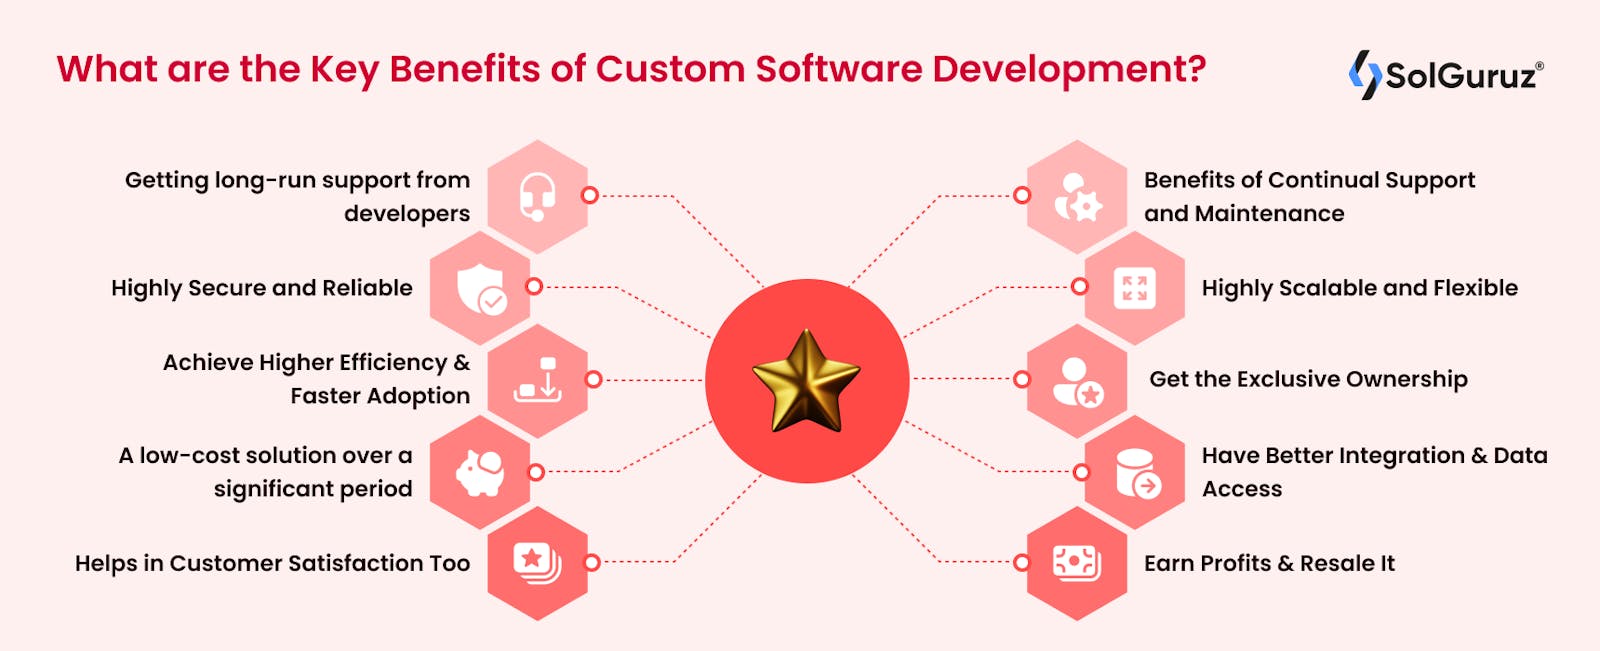 10 Key Benefits of Custom Software Development